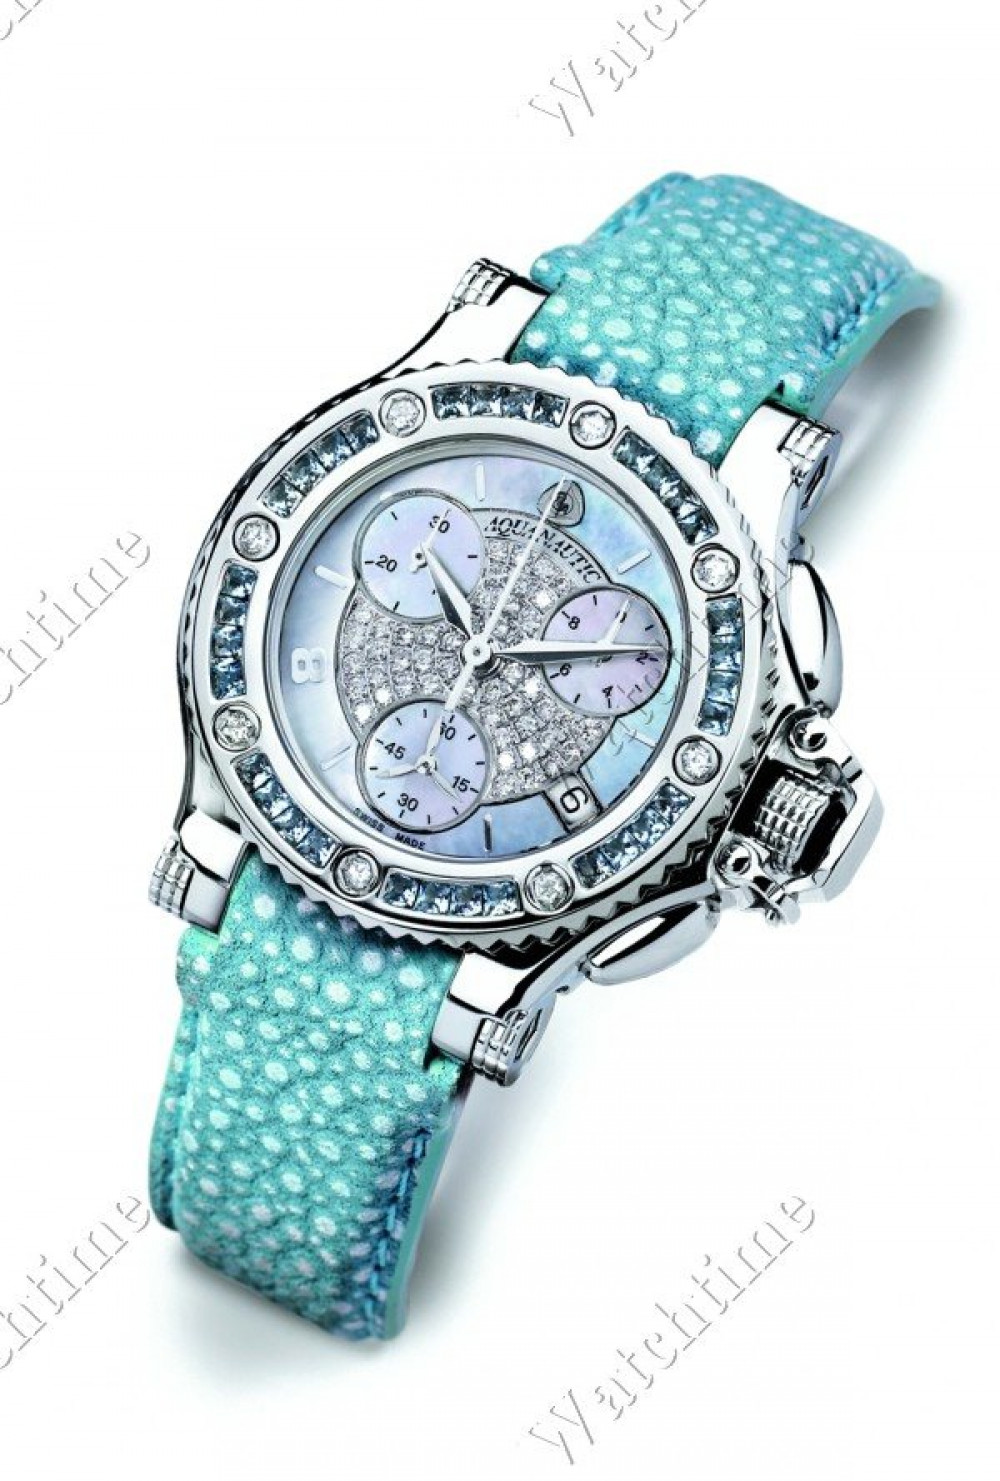 Zegarek firmy Aquanautic, model Star Princess Cuda